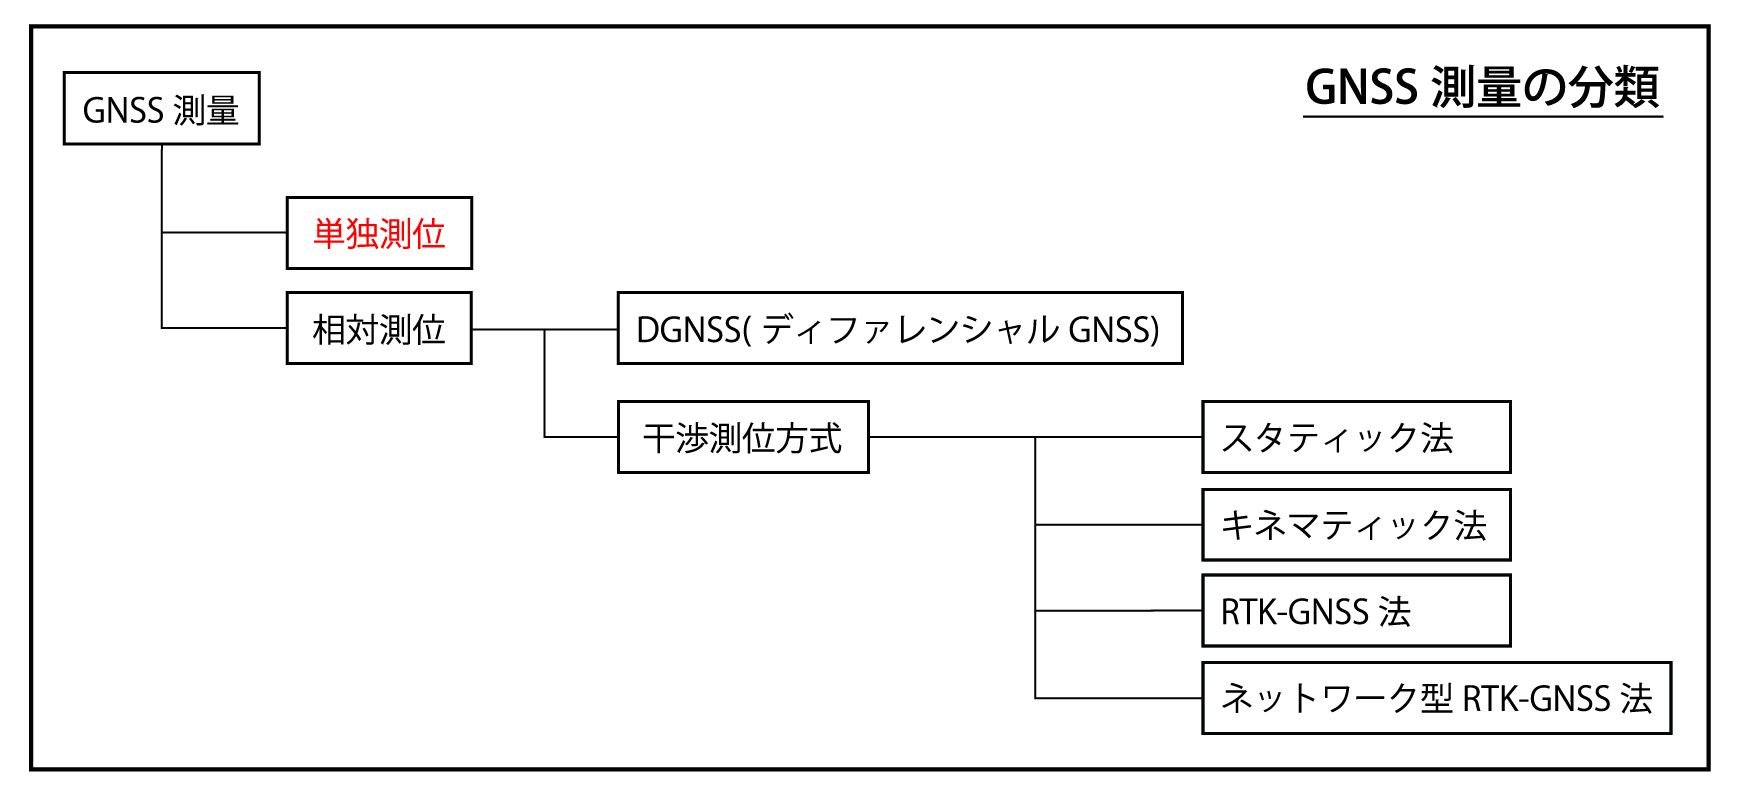 GNSS測量の分類